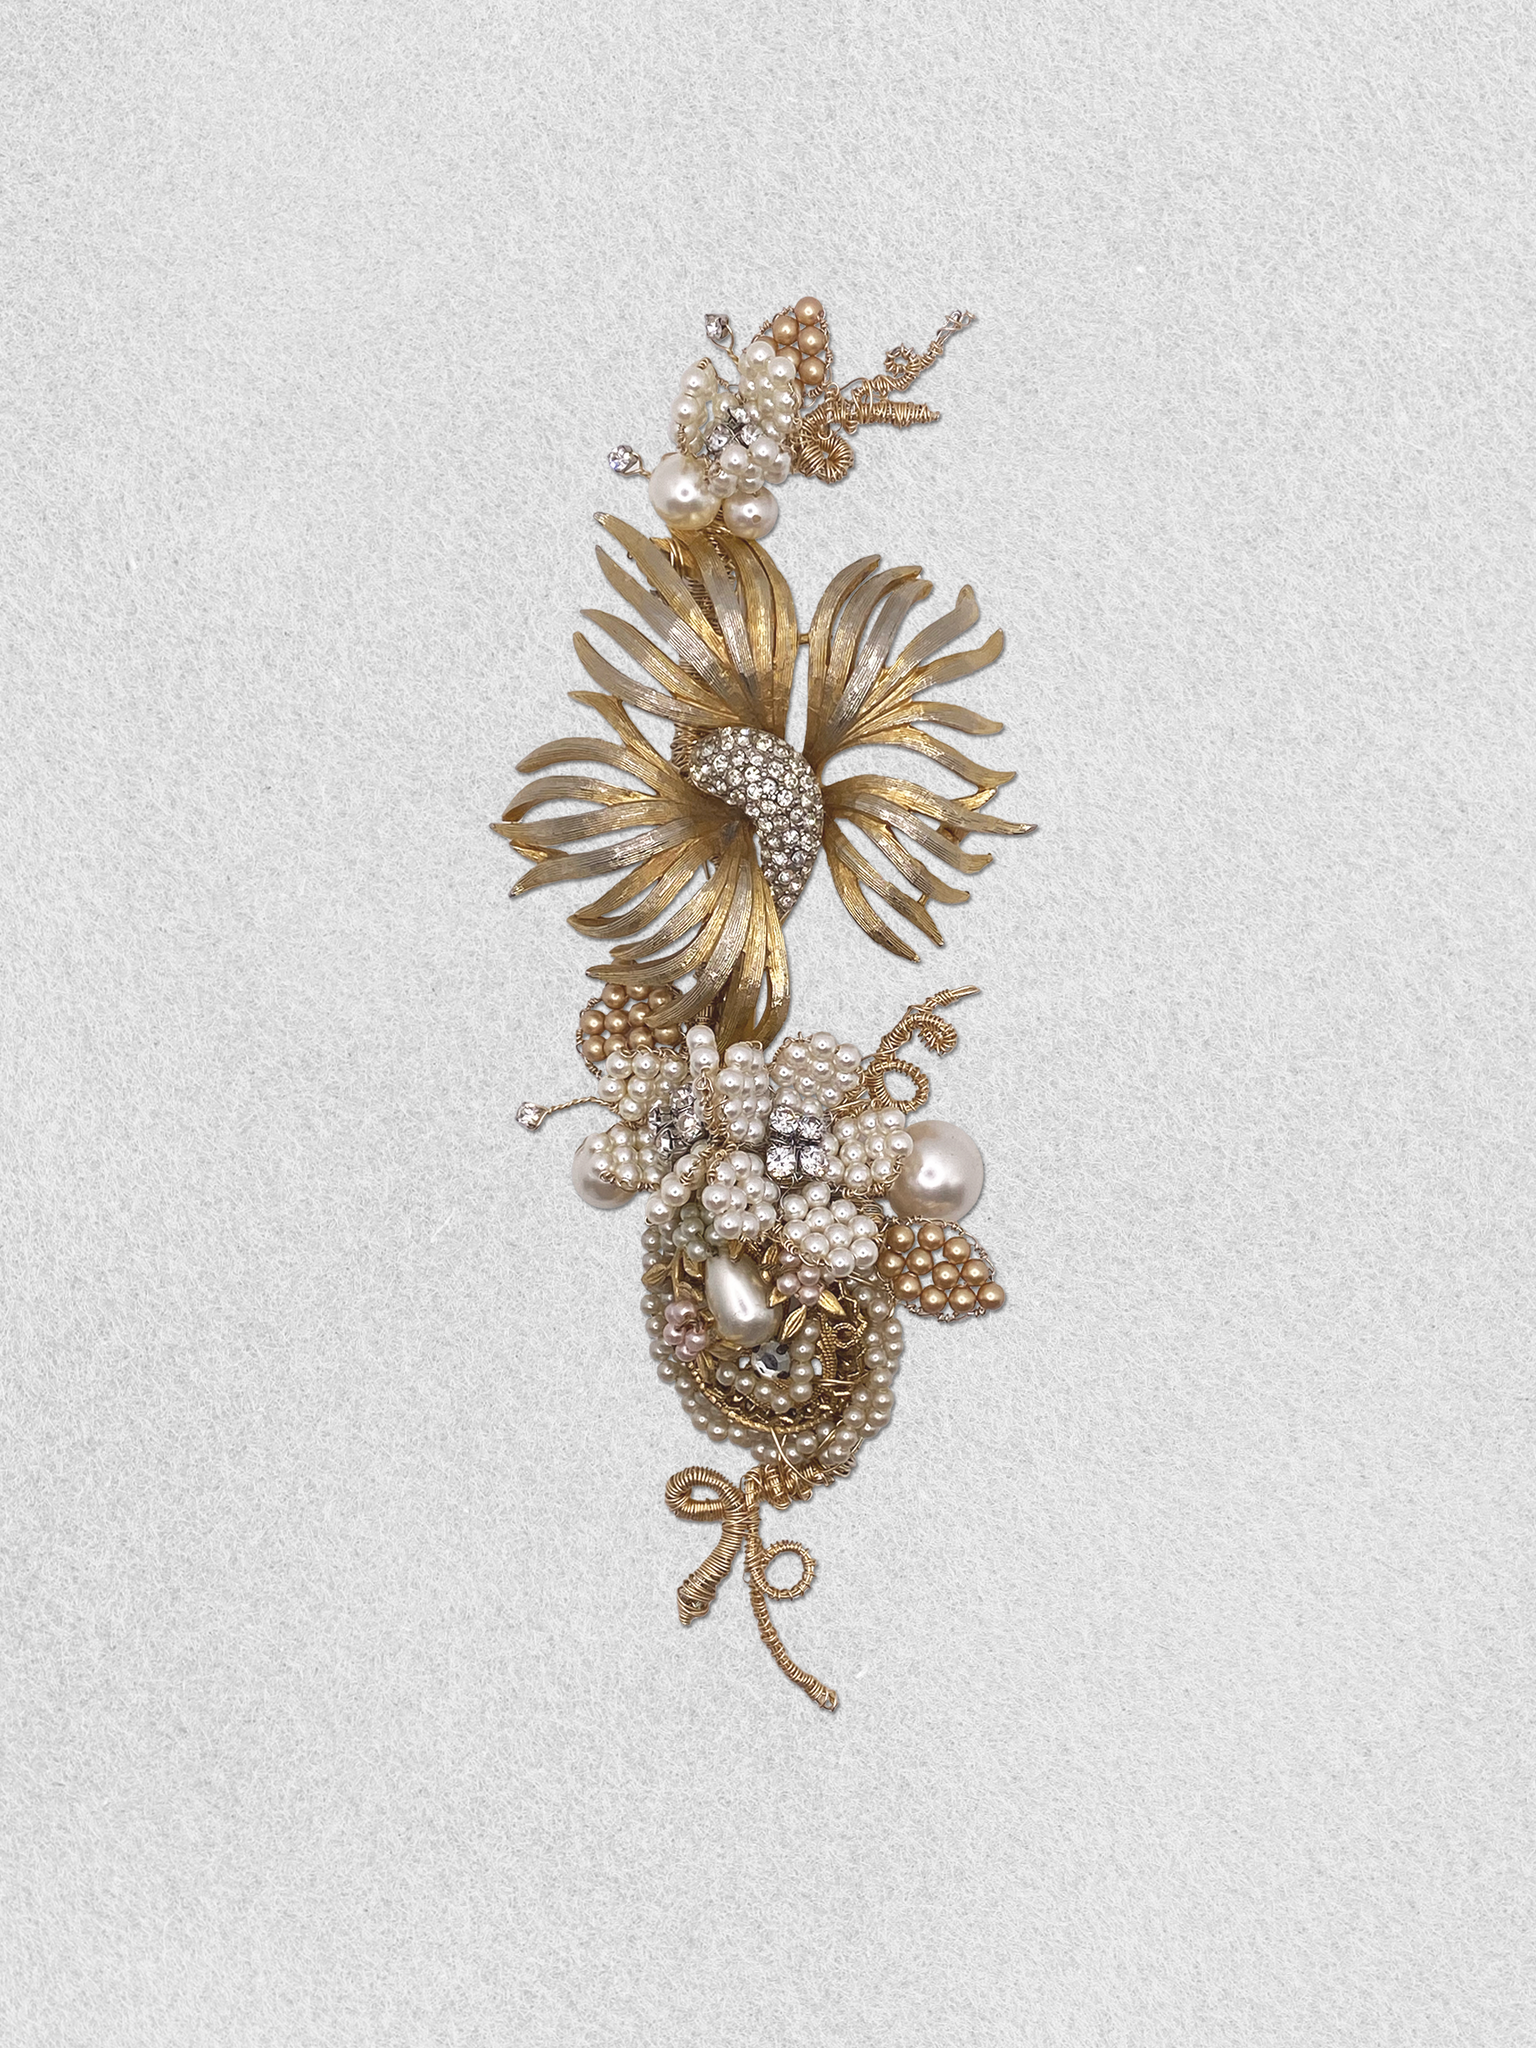 Men's Lapel Pin - Chrysanthemum of Opulence